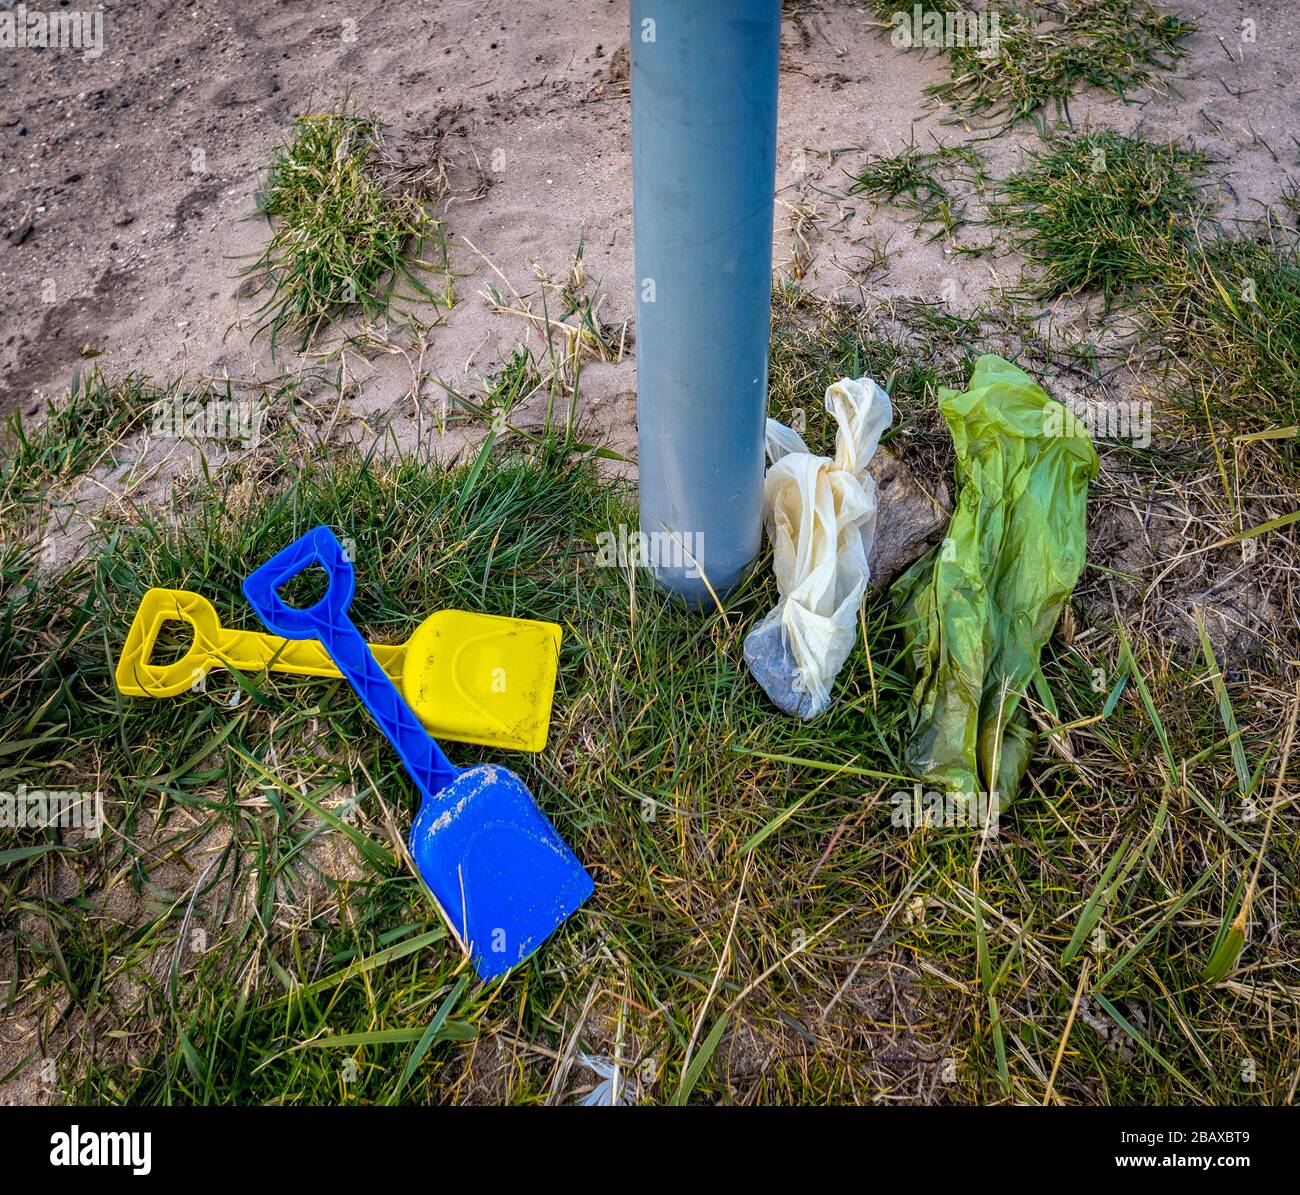 Abandoned Beach Spades and Dog Poo bags at North Berwick Beach, East Lothian, Scotland, UK. Stock Photo